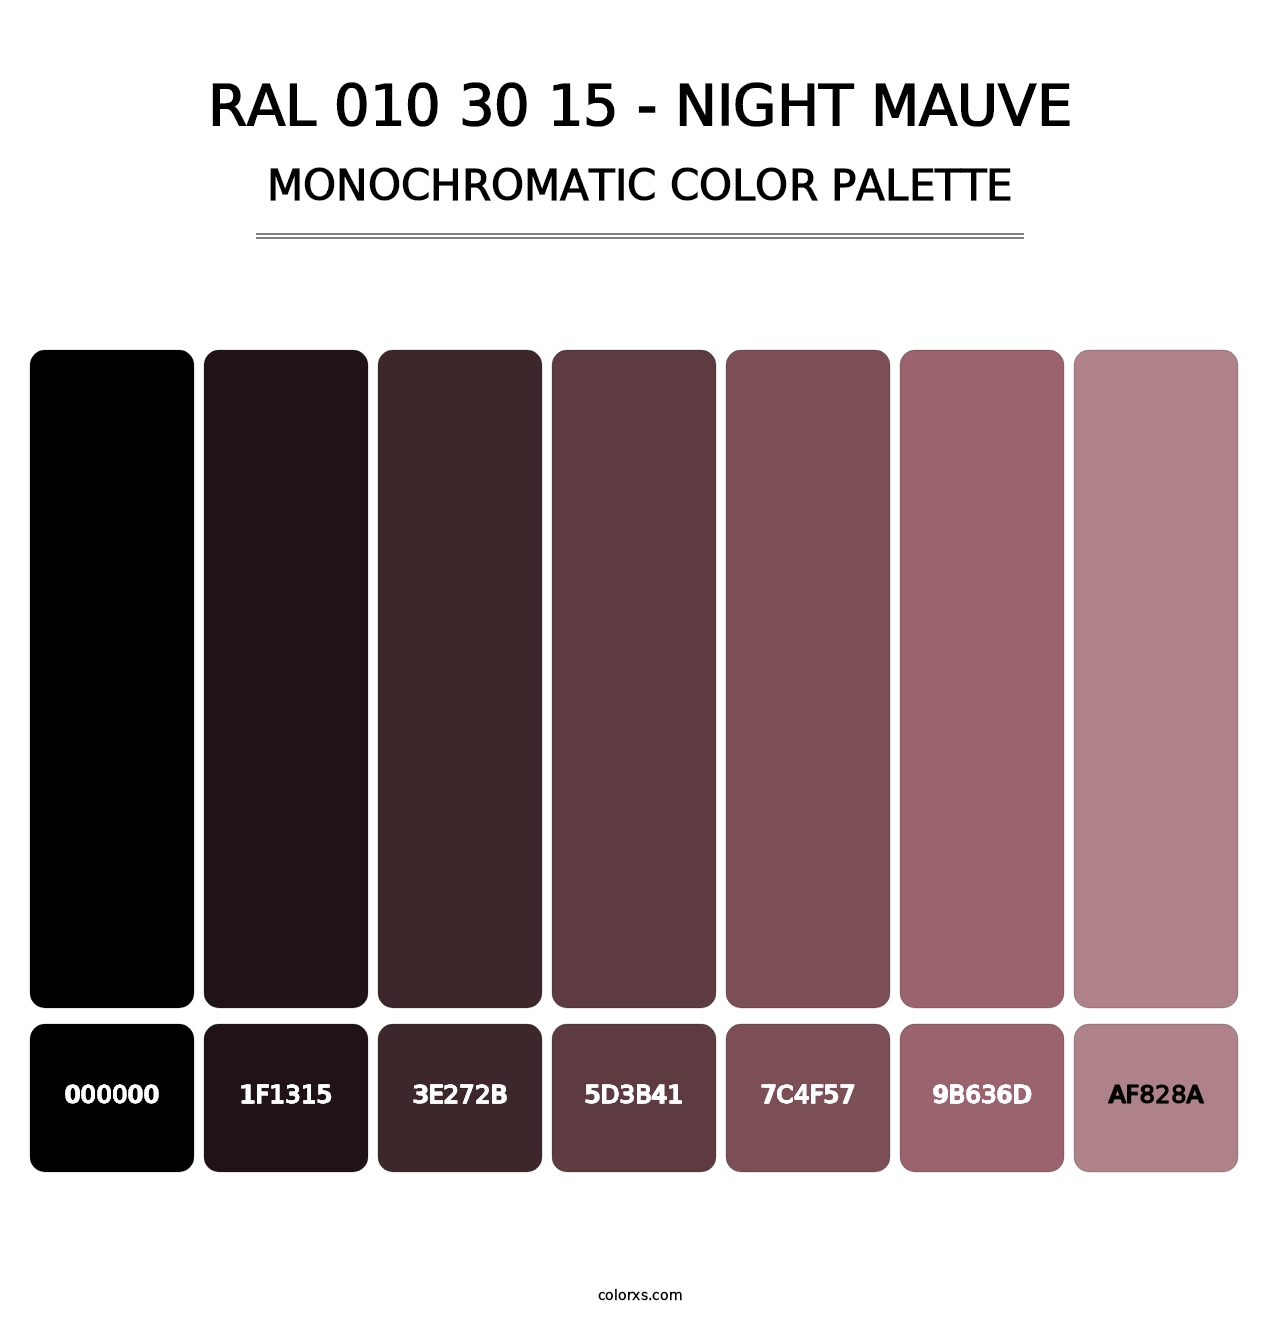 RAL 010 30 15 - Night Mauve - Monochromatic Color Palette